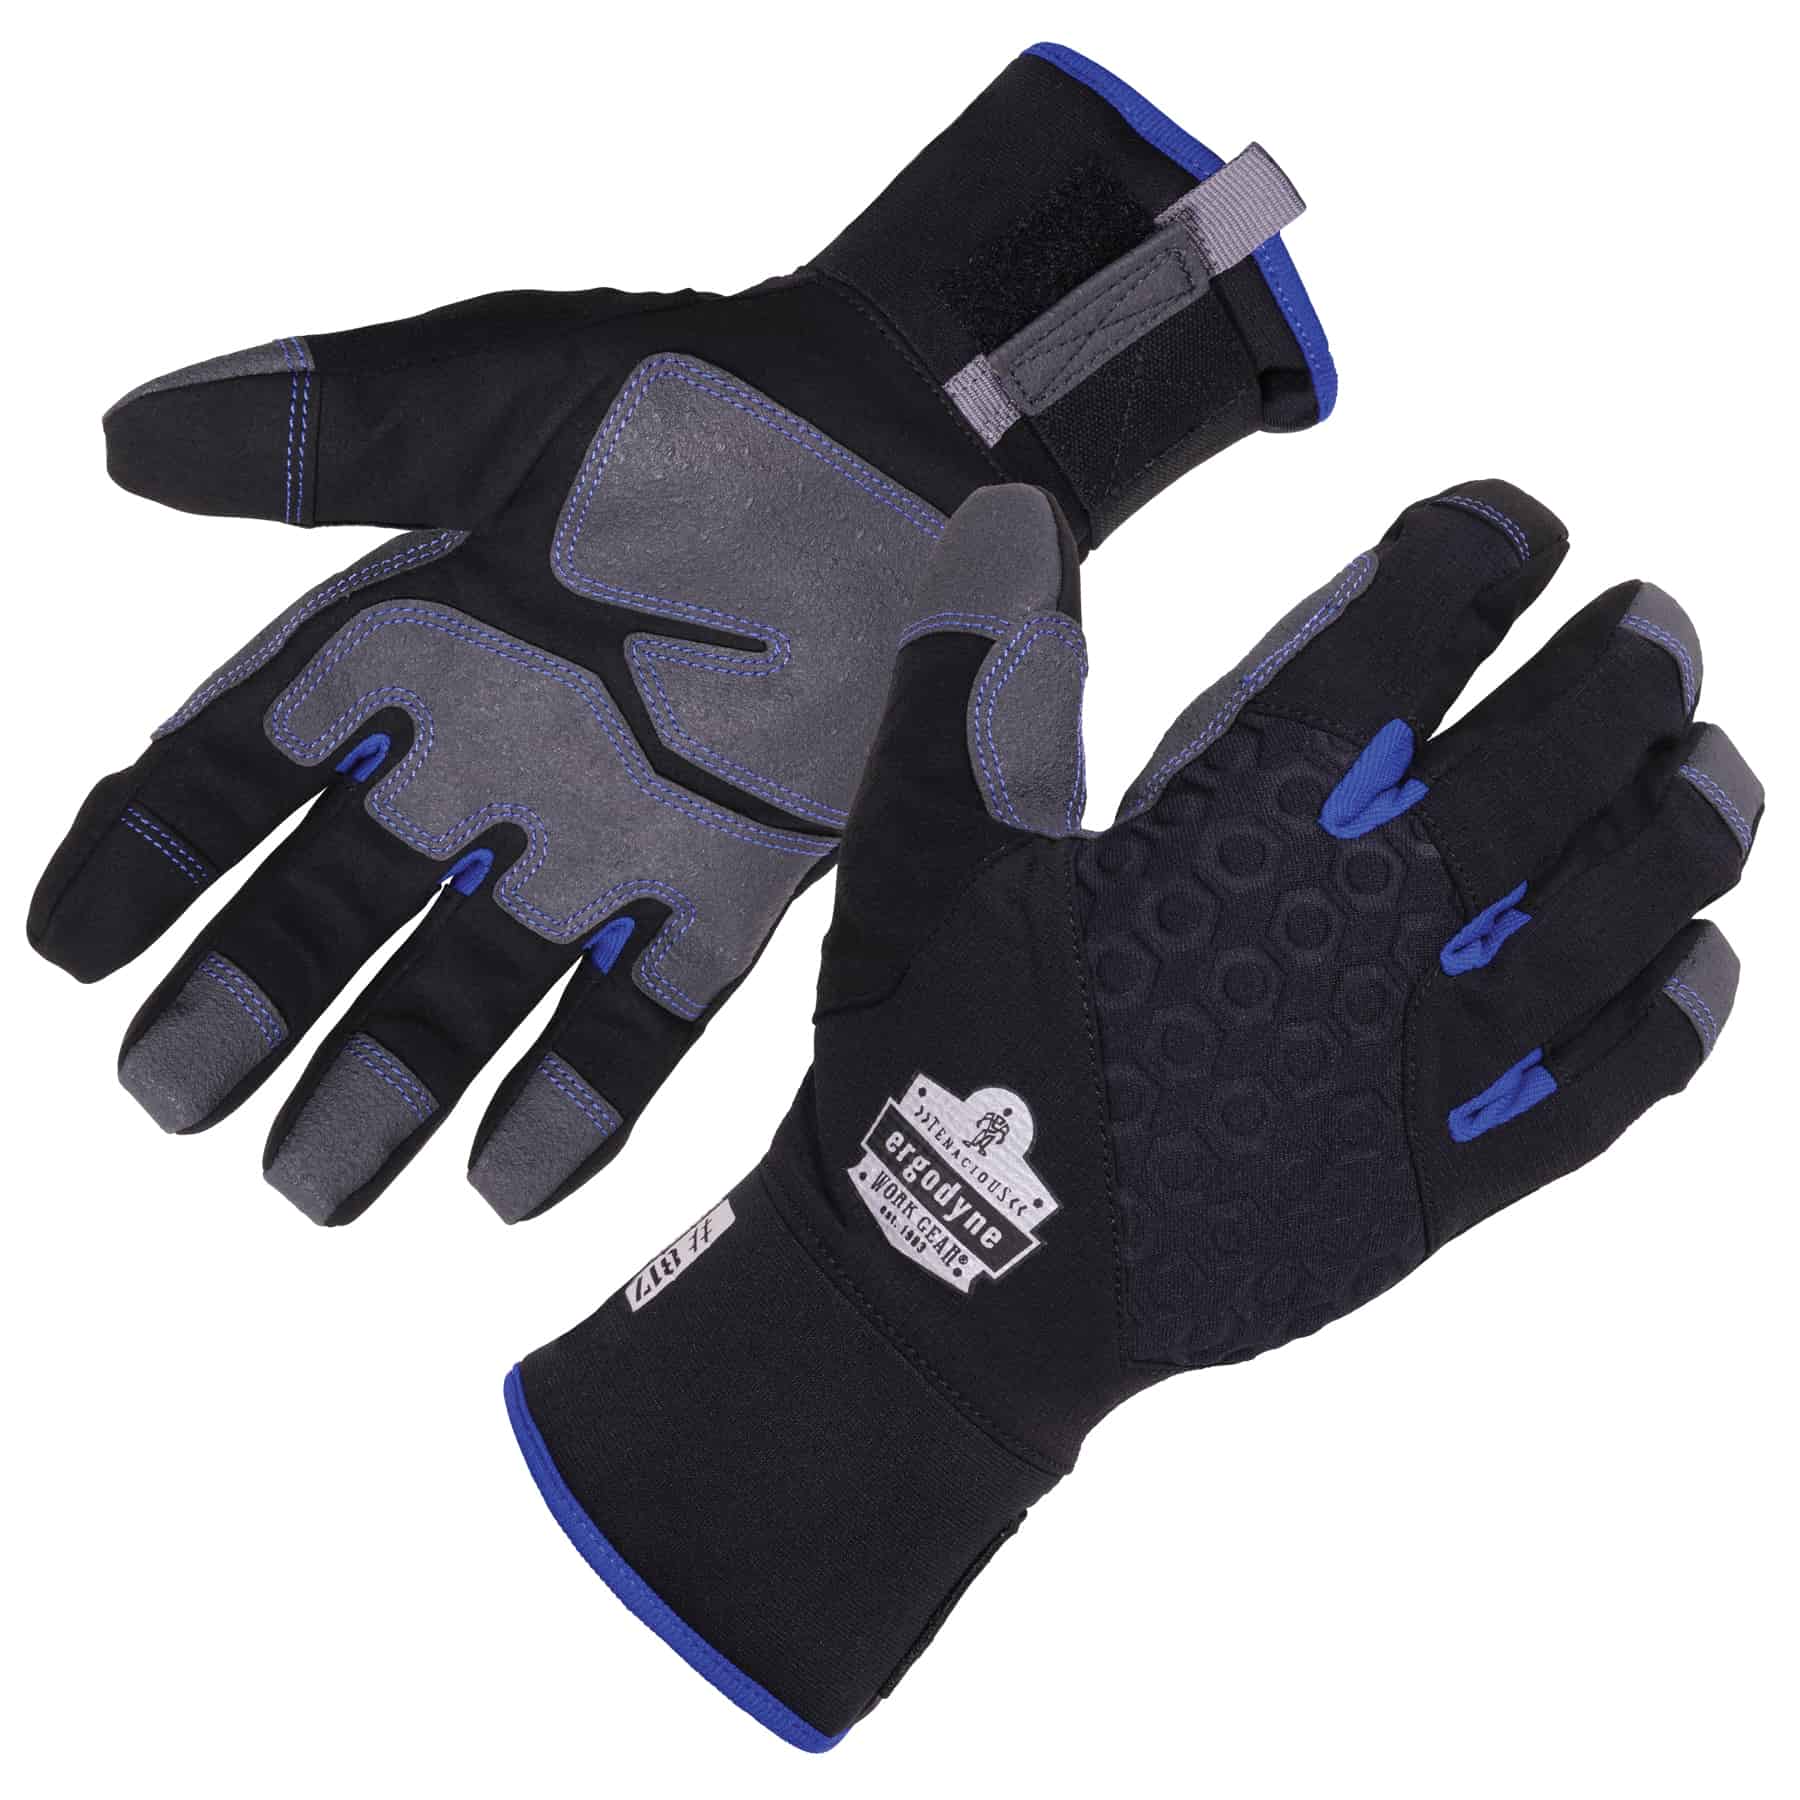 Reinforced Thermal Winter Work Gloves - Winter